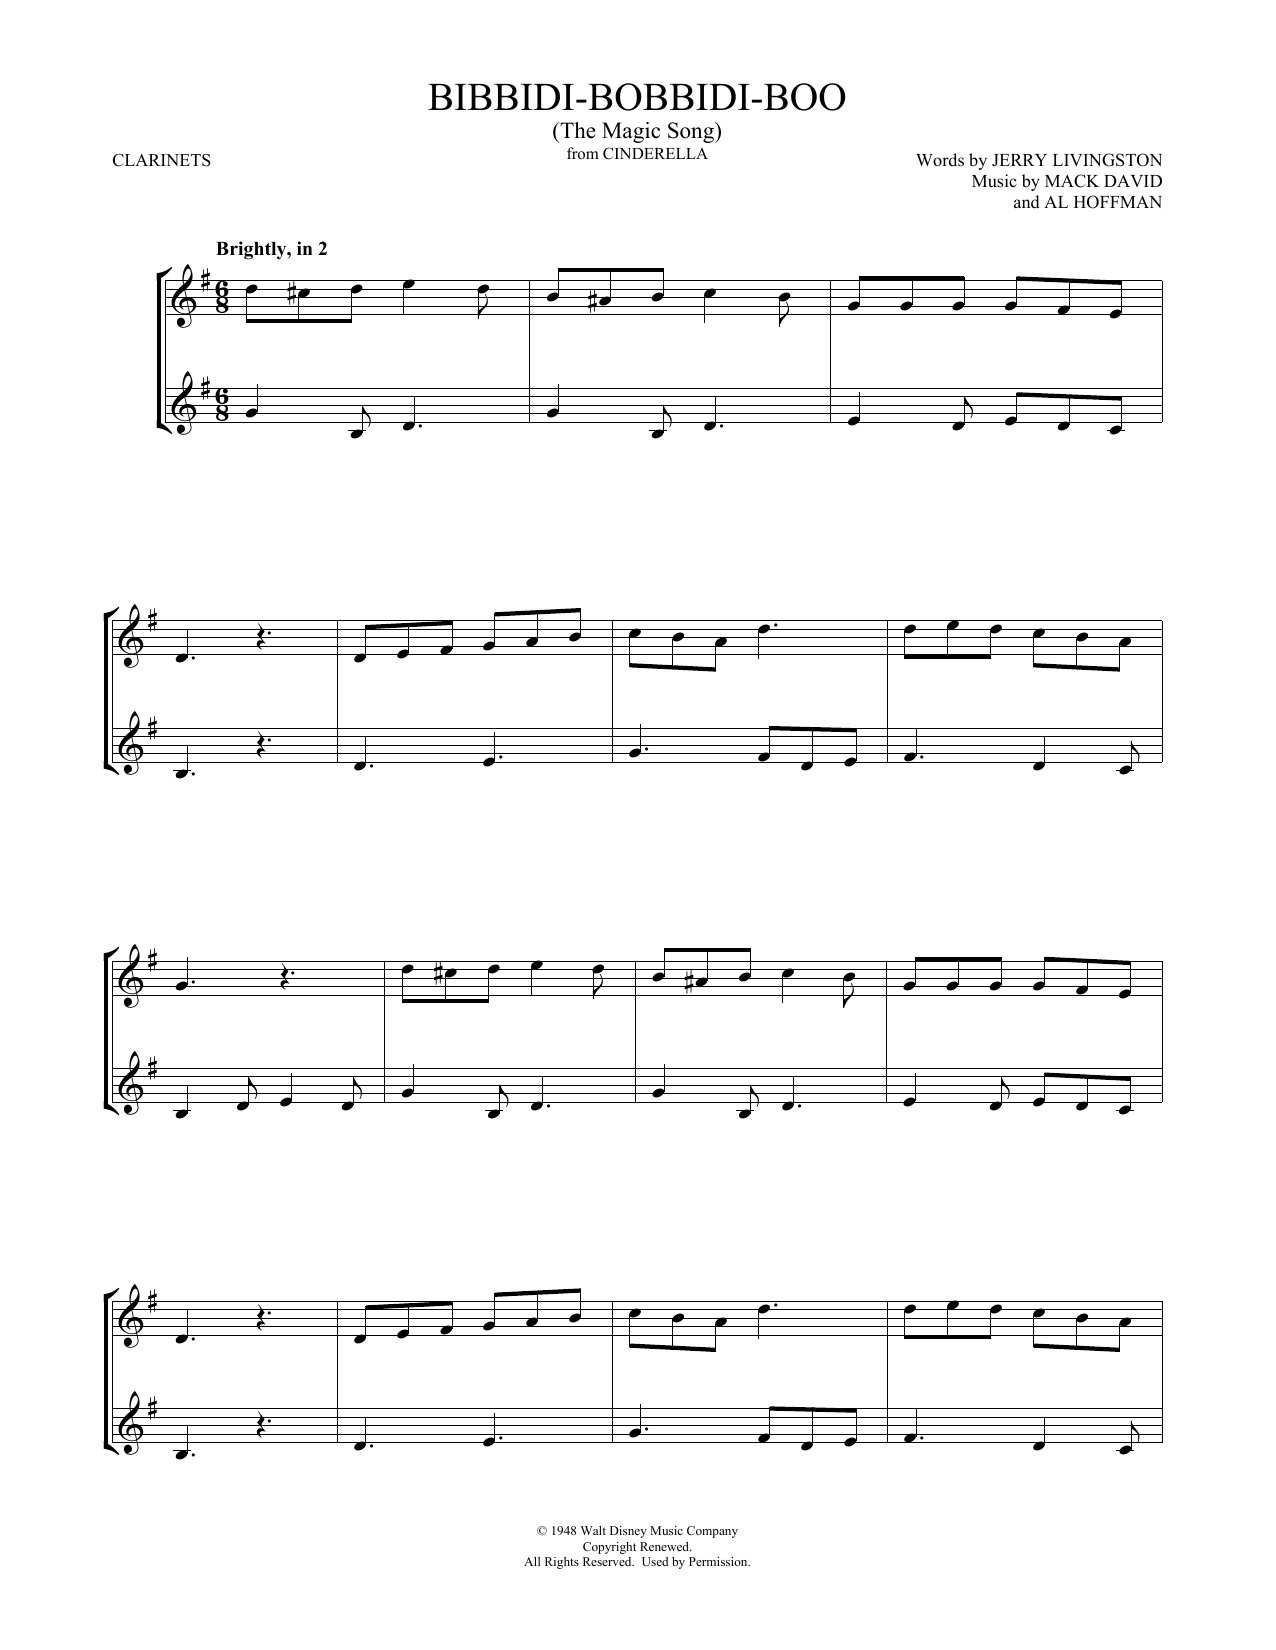 Verna Felton Bibbidi-Bobbidi-Boo (The Magic Song) (from Cinderella) Sheet Music Notes & Chords for Trumpet Duet - Download or Print PDF